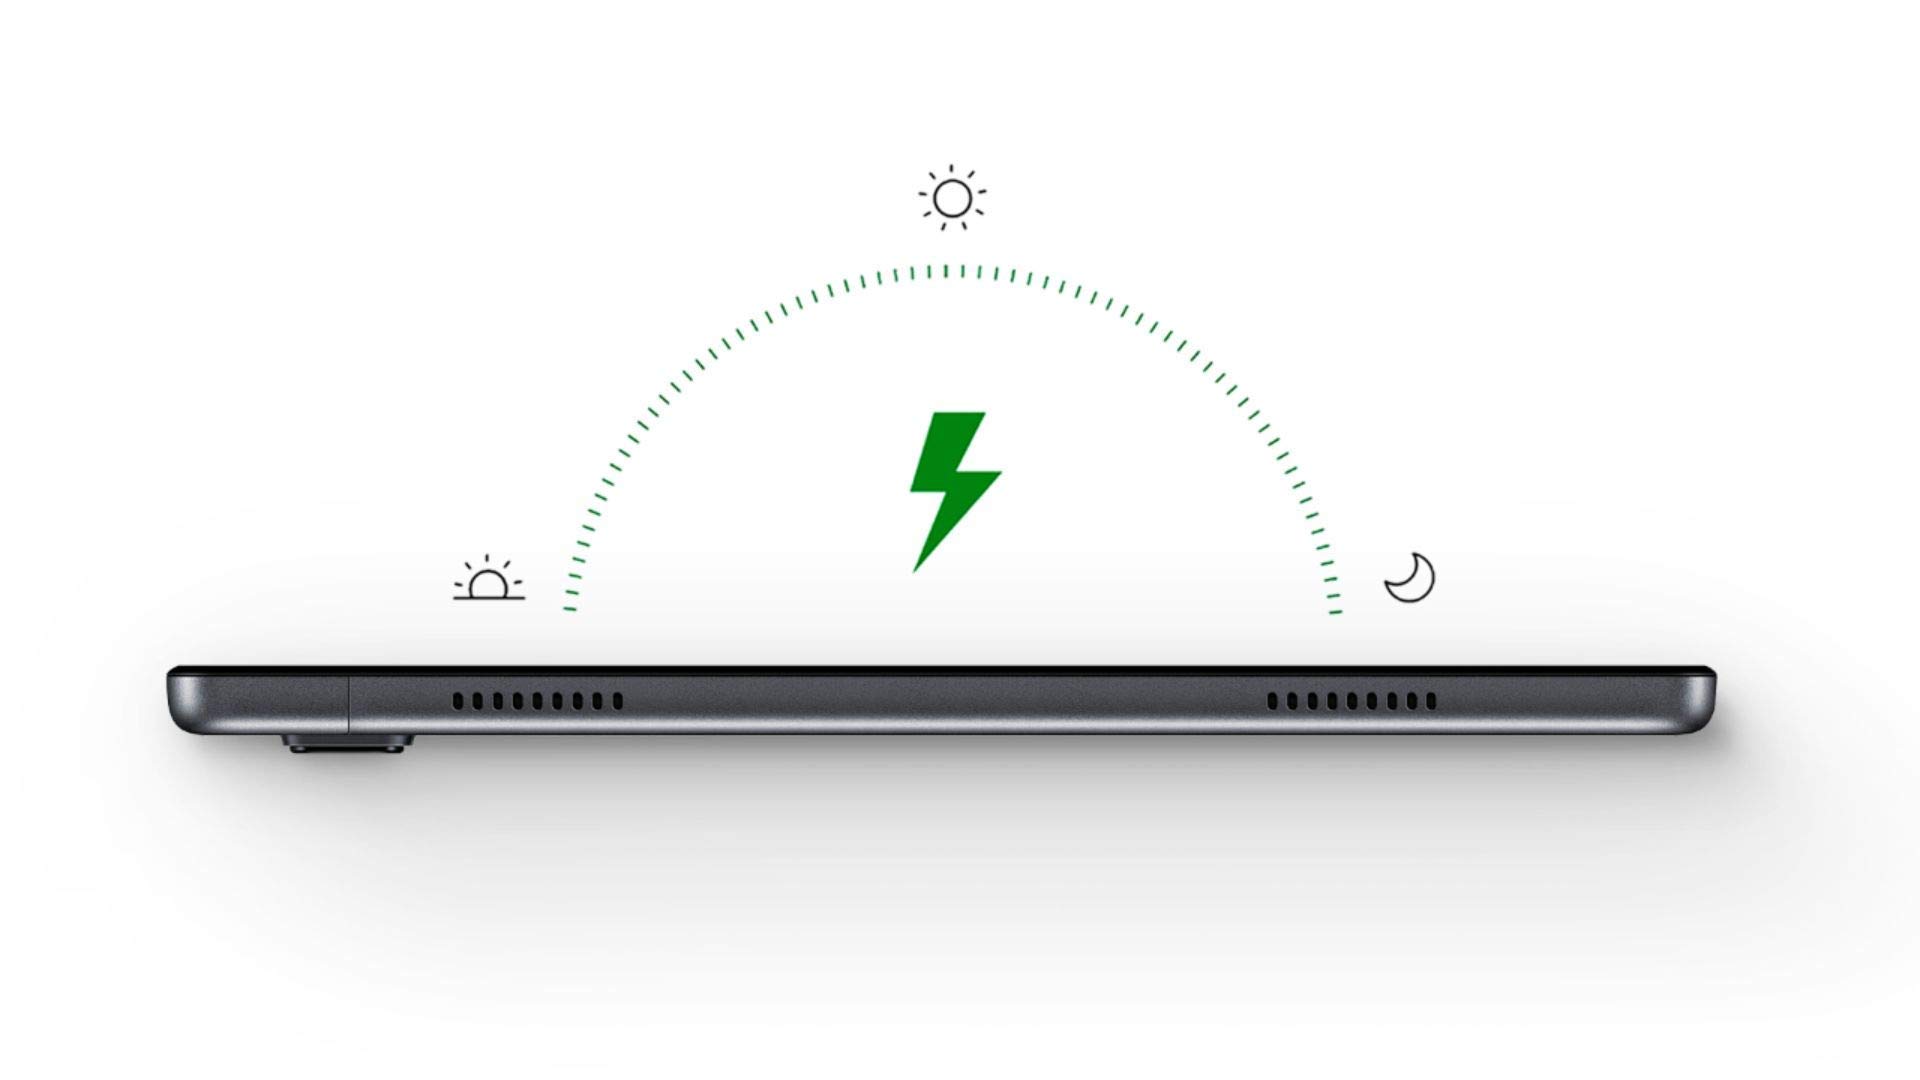 SAMSUNG 2020 Galaxy Tab A7 10.4’’ (2000x1200) TFT Display Wi-Fi Tablet Bundle, Qualcomm Snapdragon 662, 3GB RAM, Bluetooth, Dolby Atmos Audio, Android 10 OS w/Tigology Accessories (64GB, Gray)